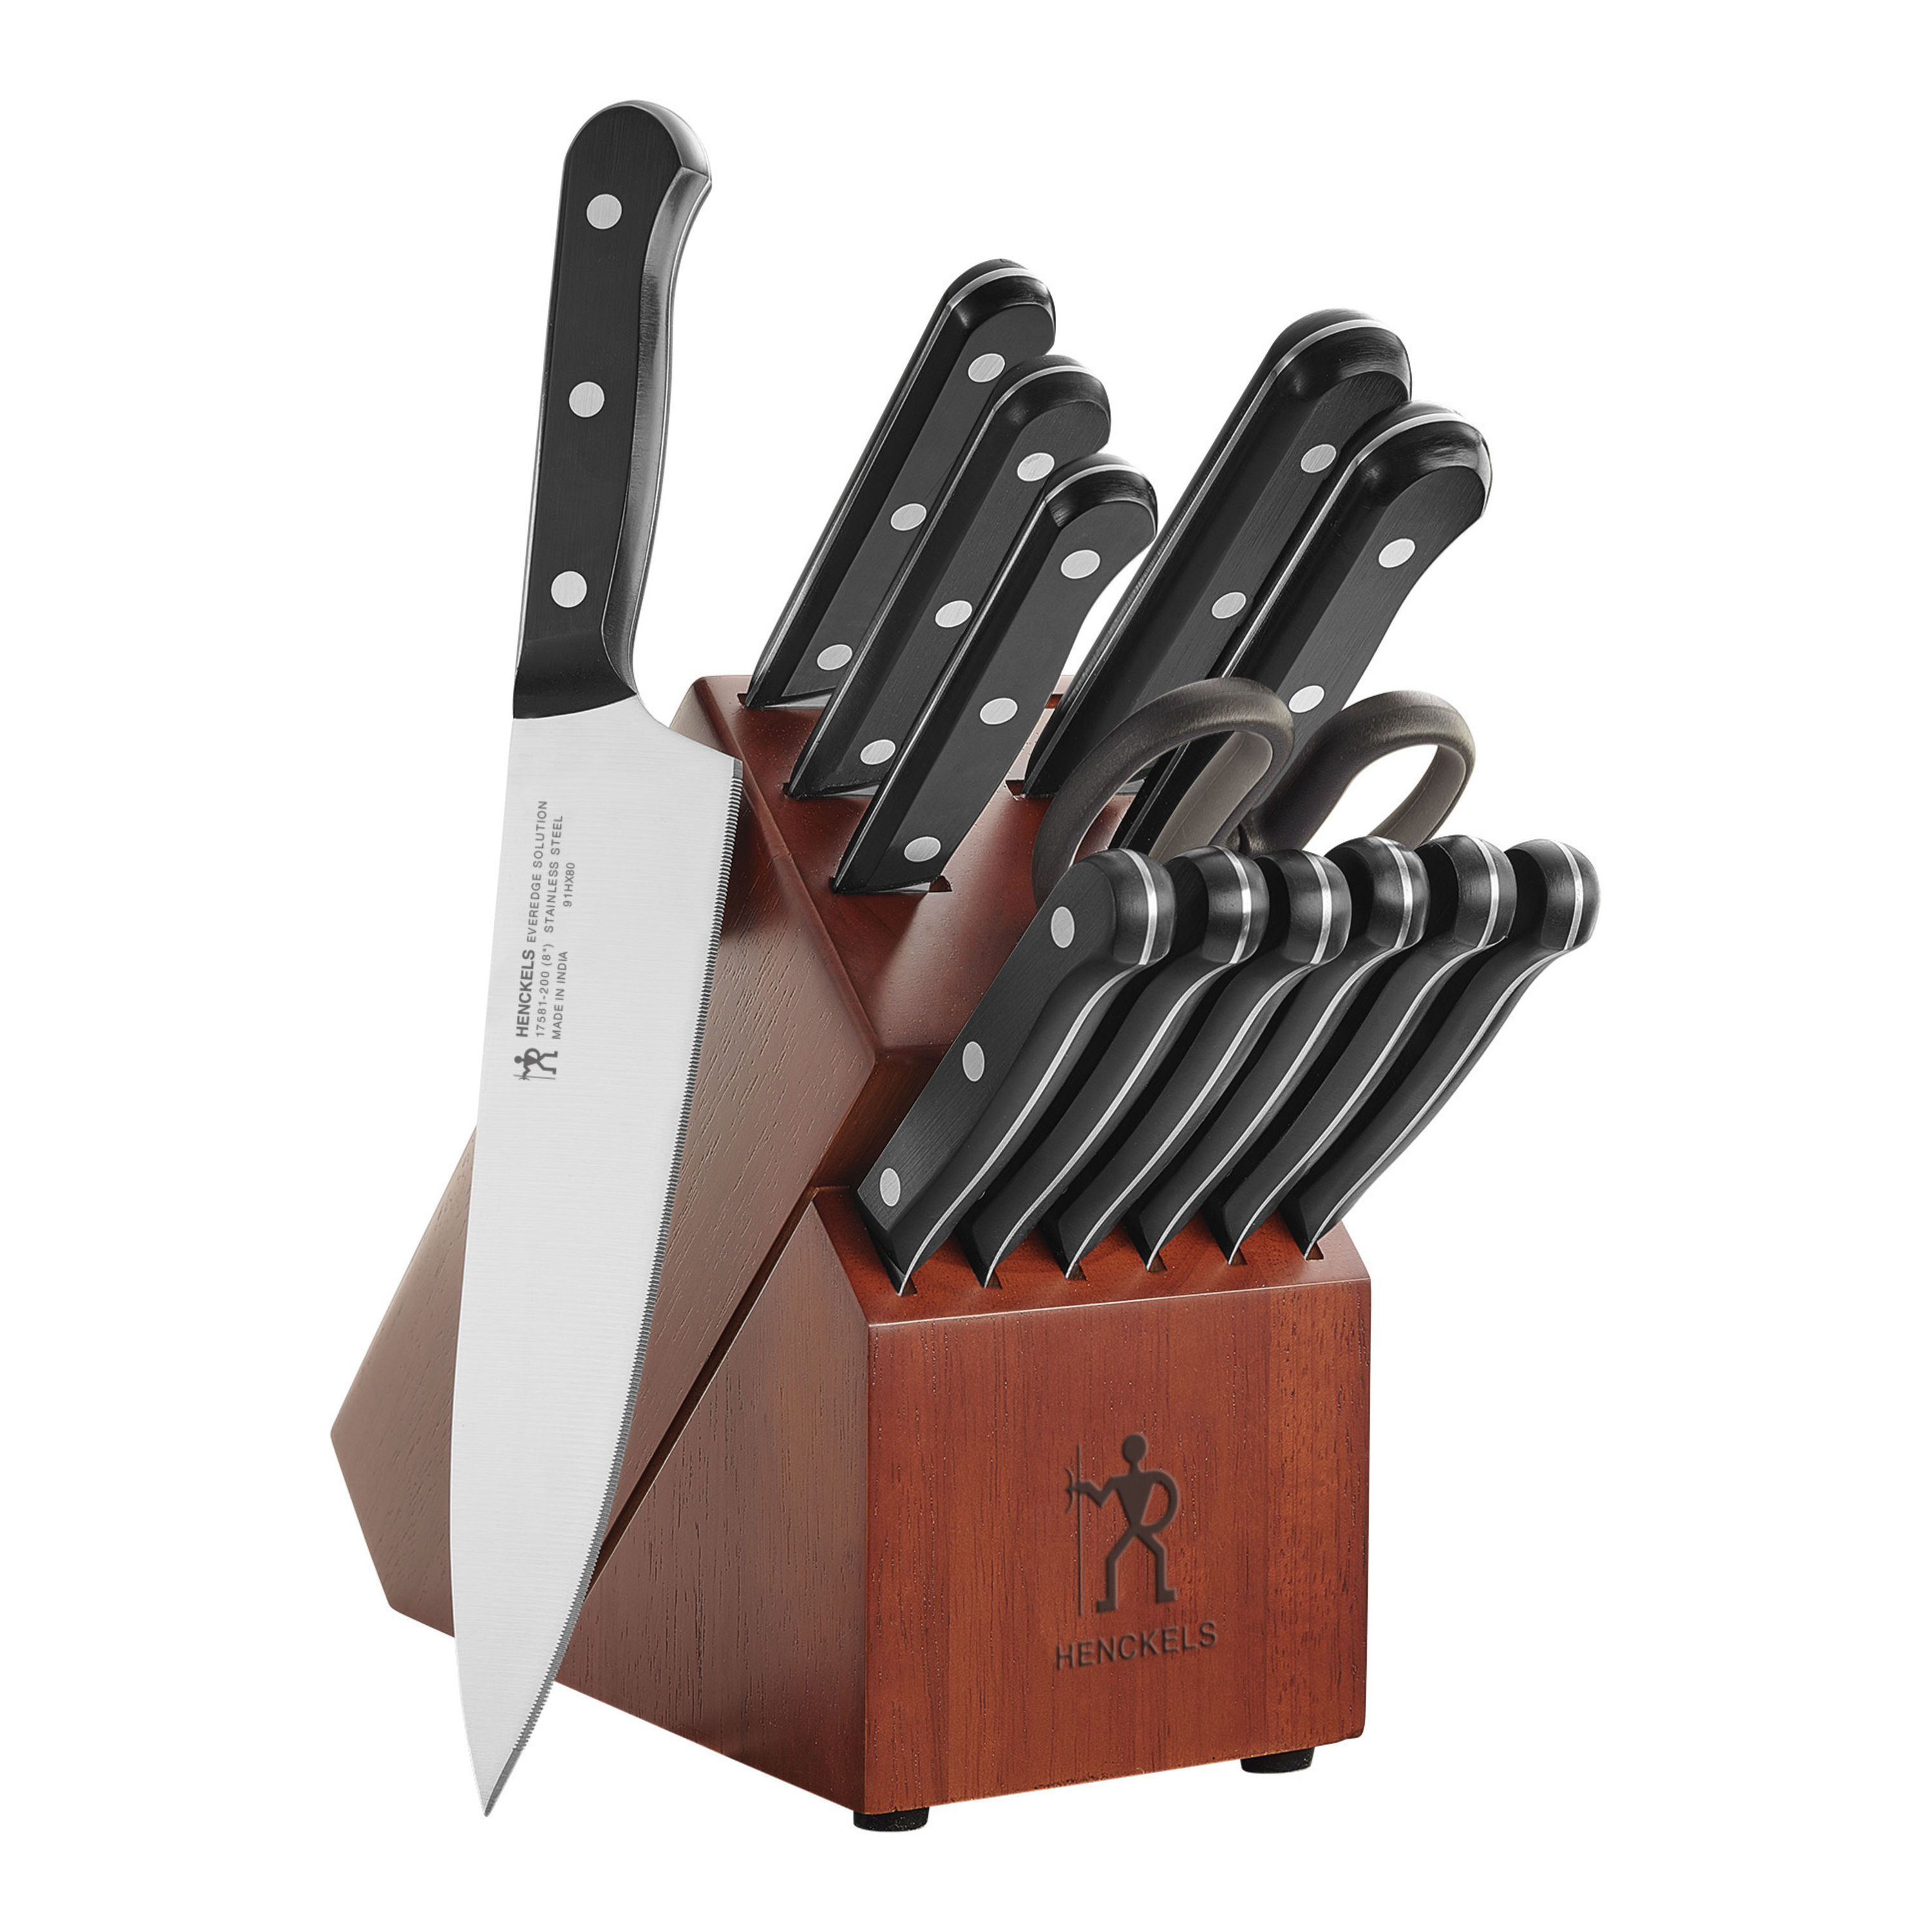 KitchenAid 14pc Stainless Steel Knife Block Set 14 ct